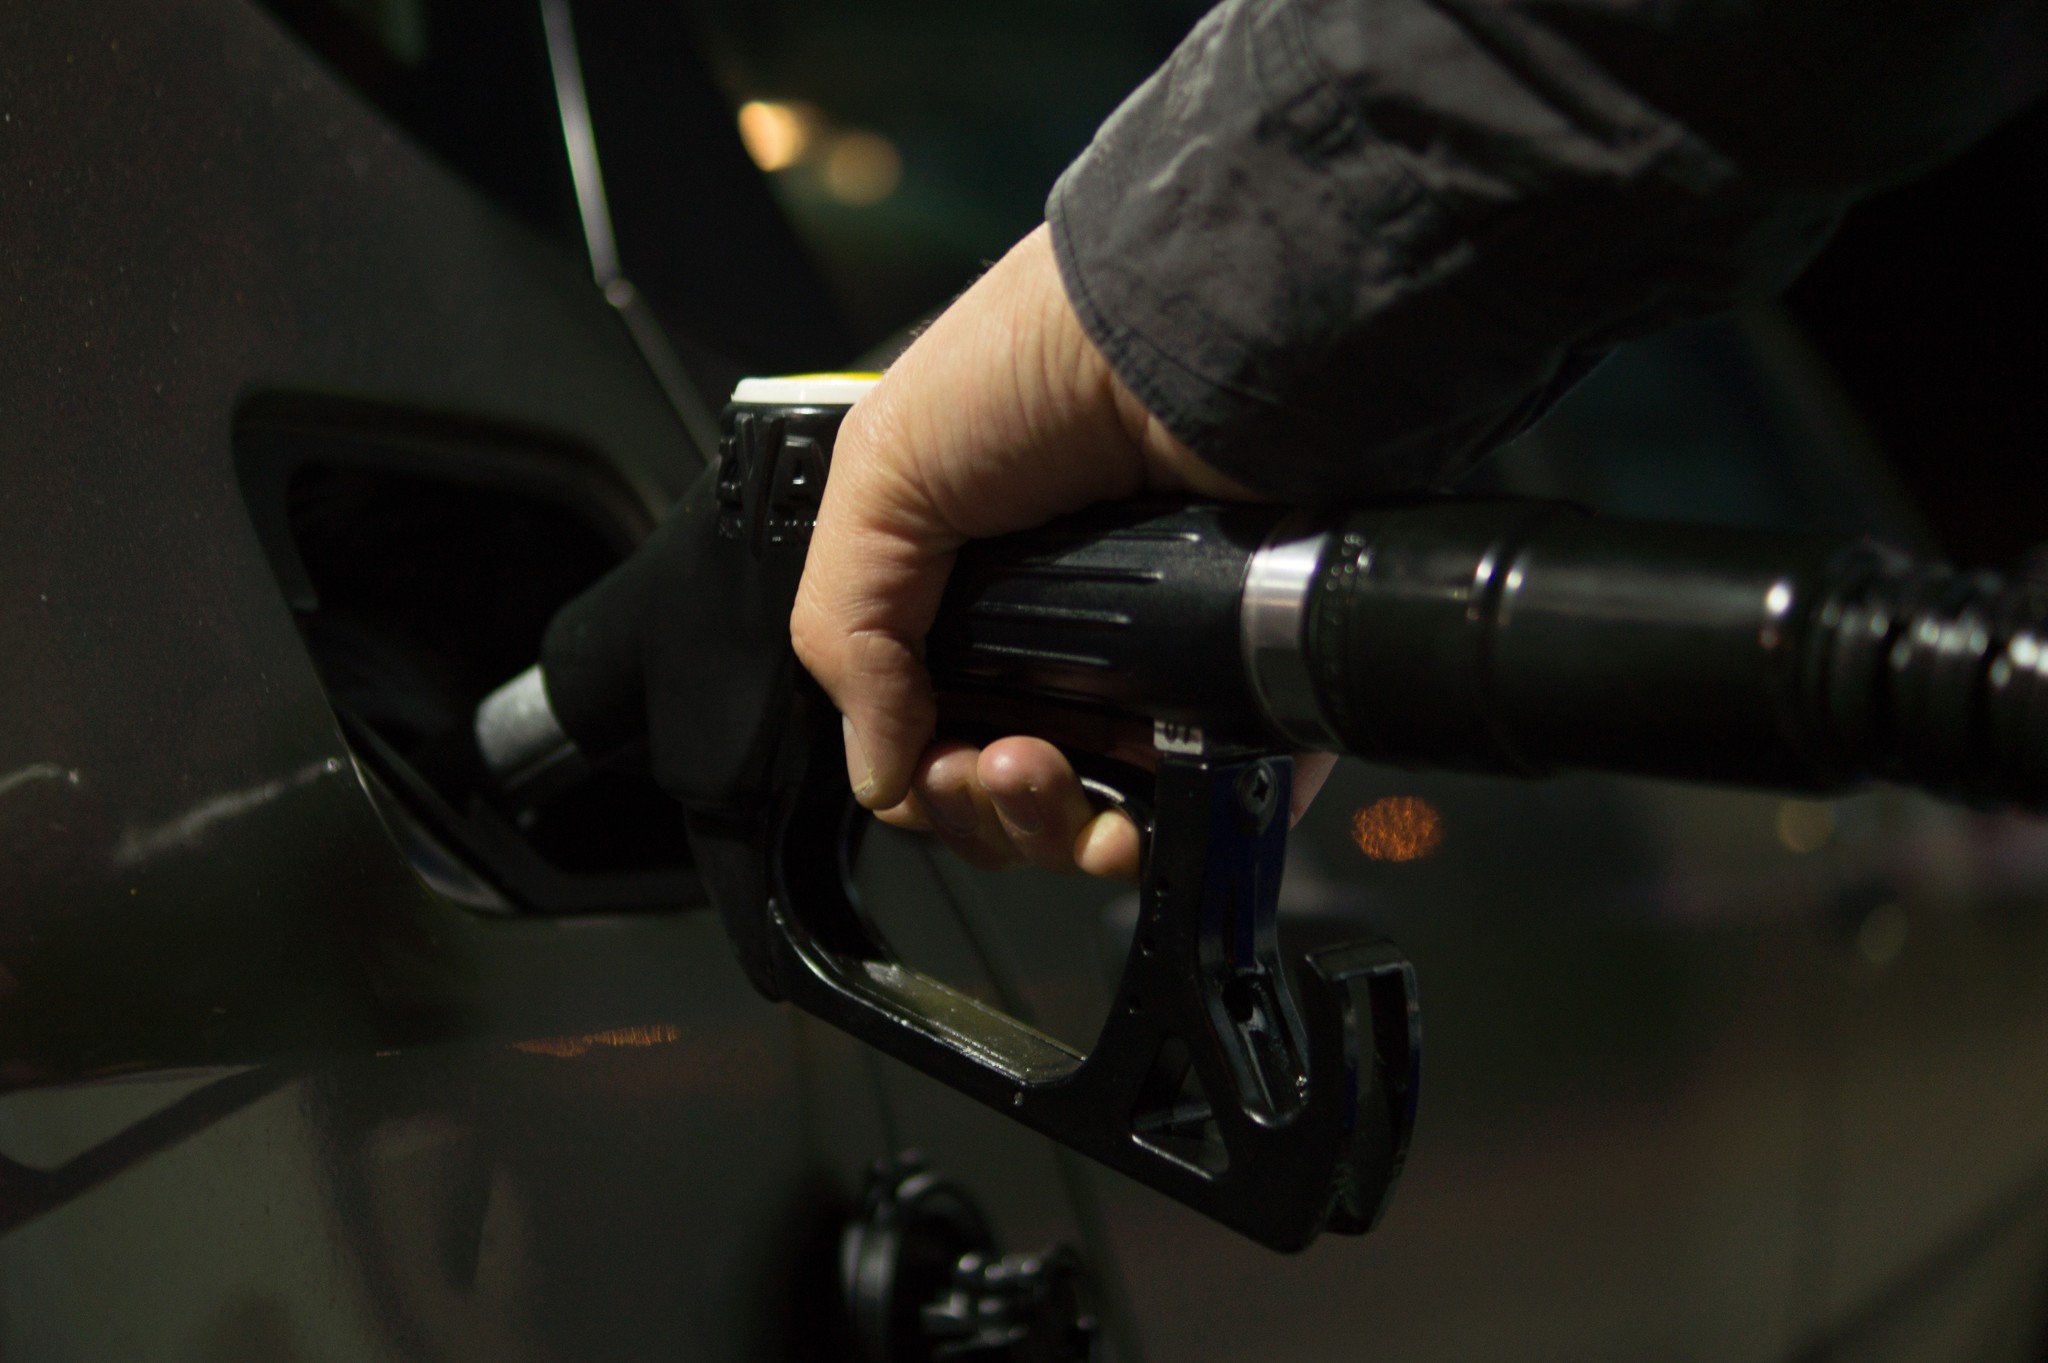 Car filling station fuel pump 9796 6a0z